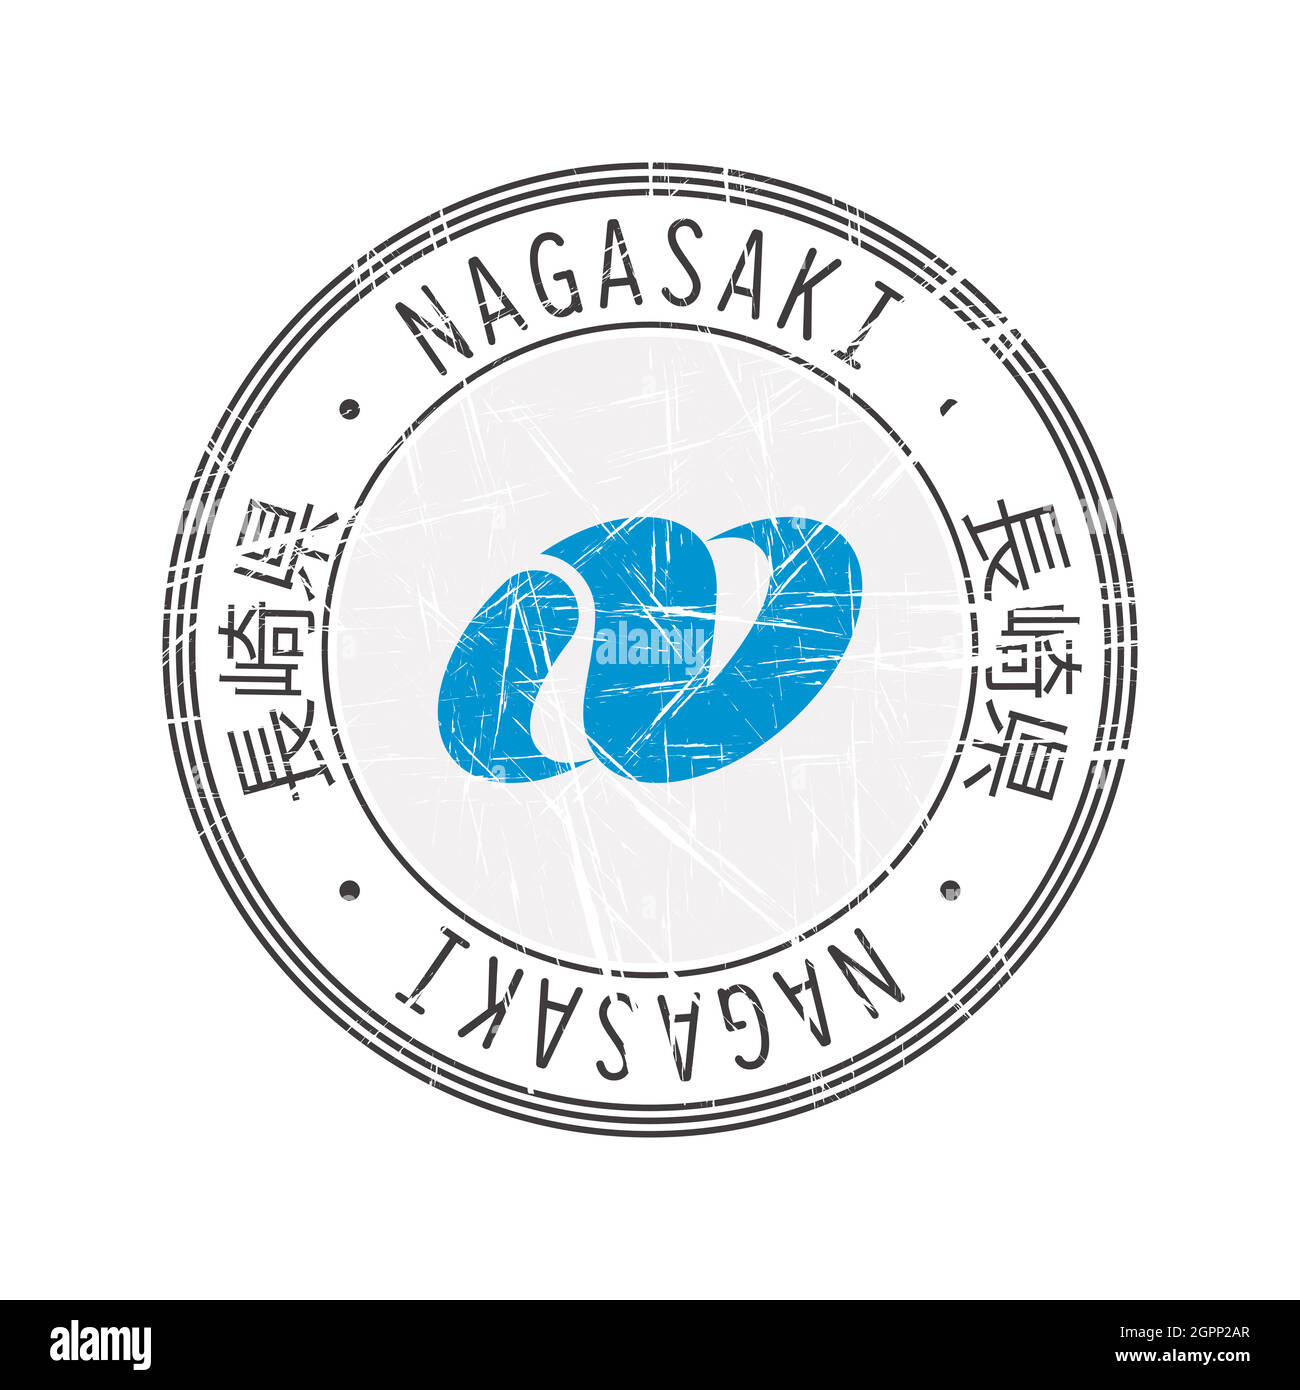 Nagasaki Prefecture rubber stamp Stock Vector